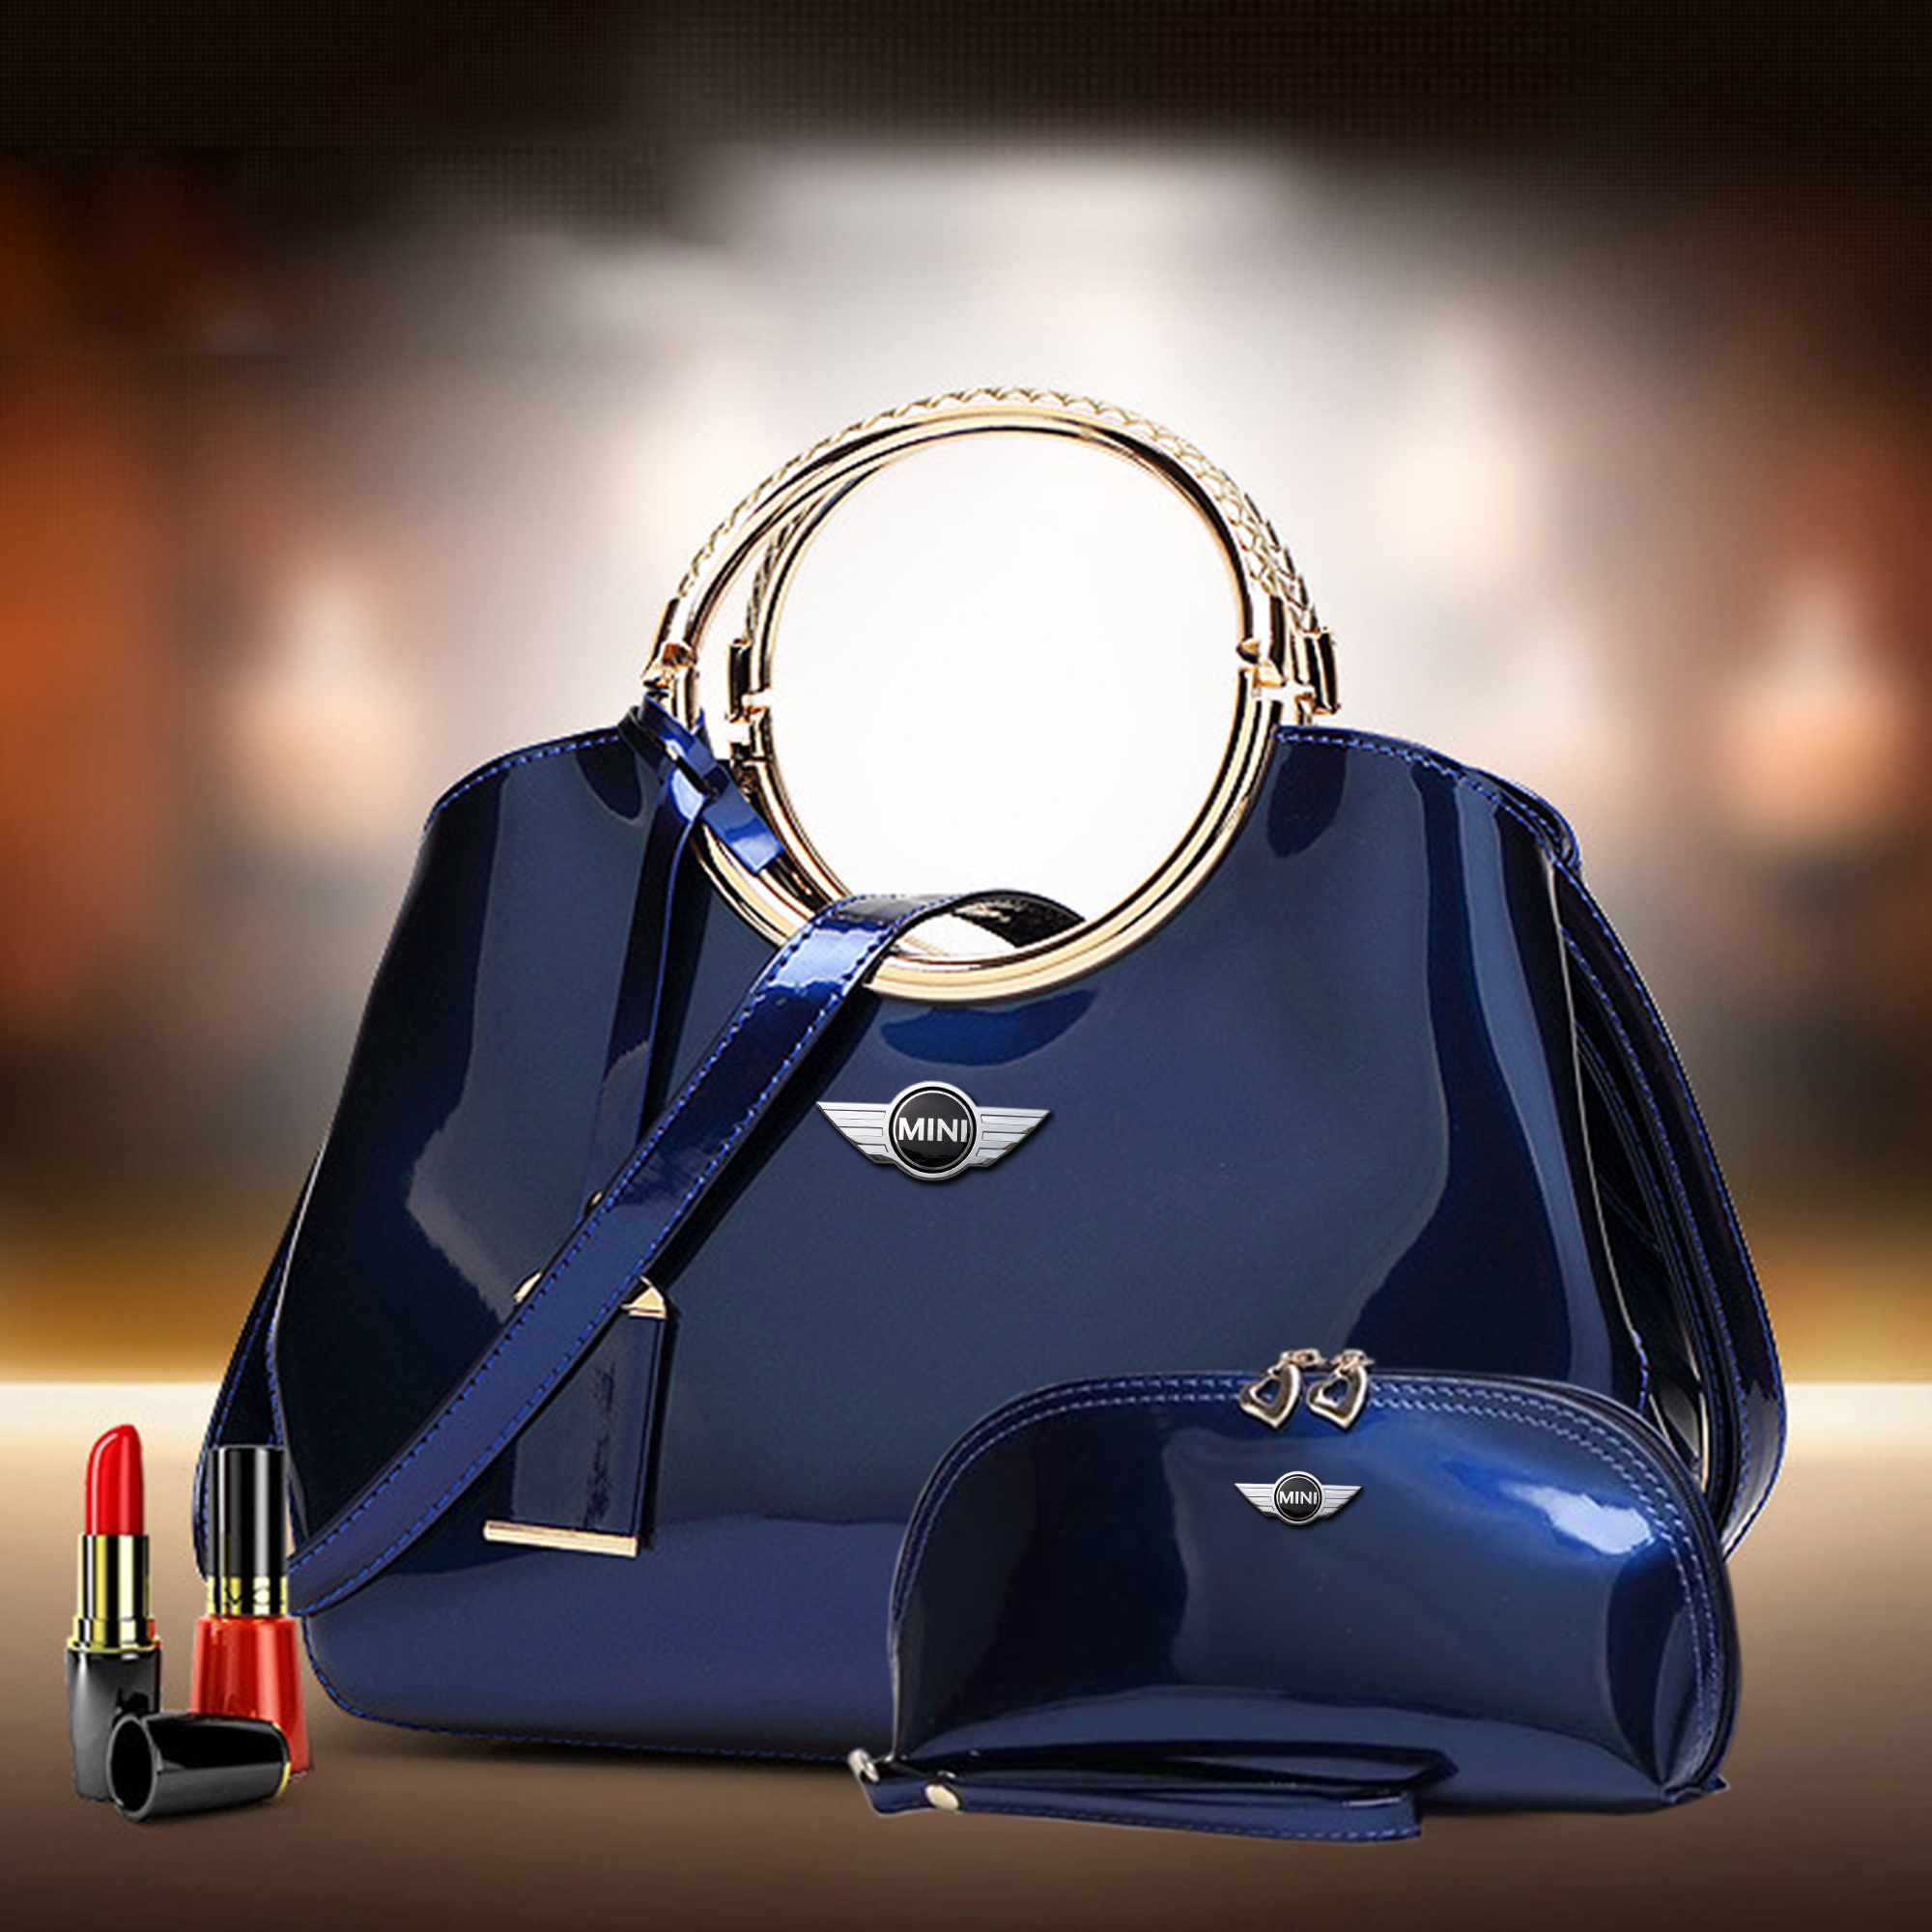 Women's Handbags & Purses for sale in Toledo, Ohio | Facebook Marketplace |  Facebook